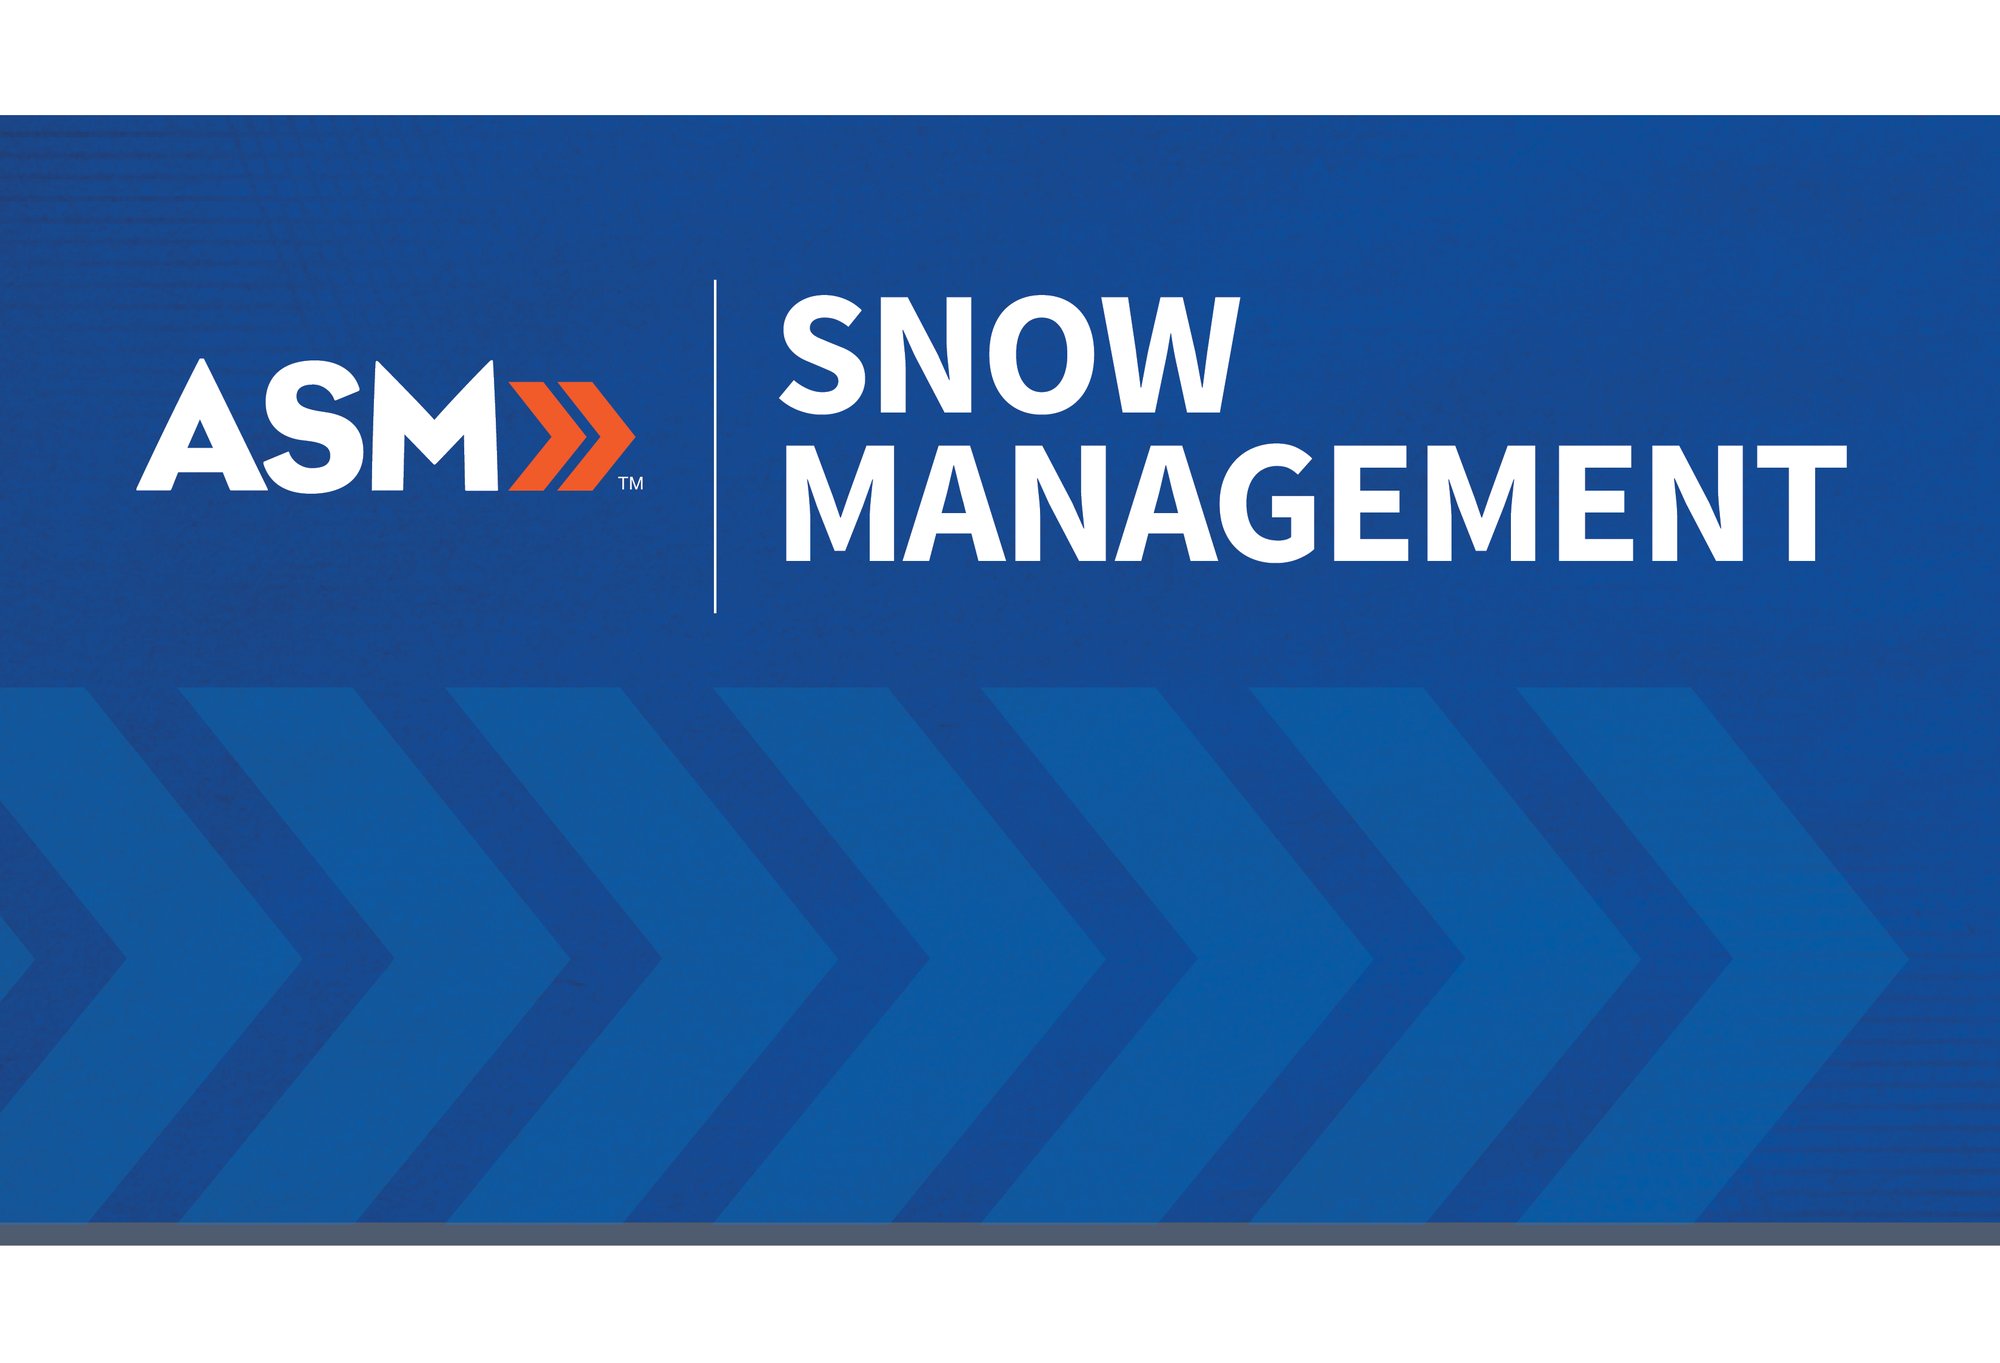 ASM SNOW MANAGEMENT